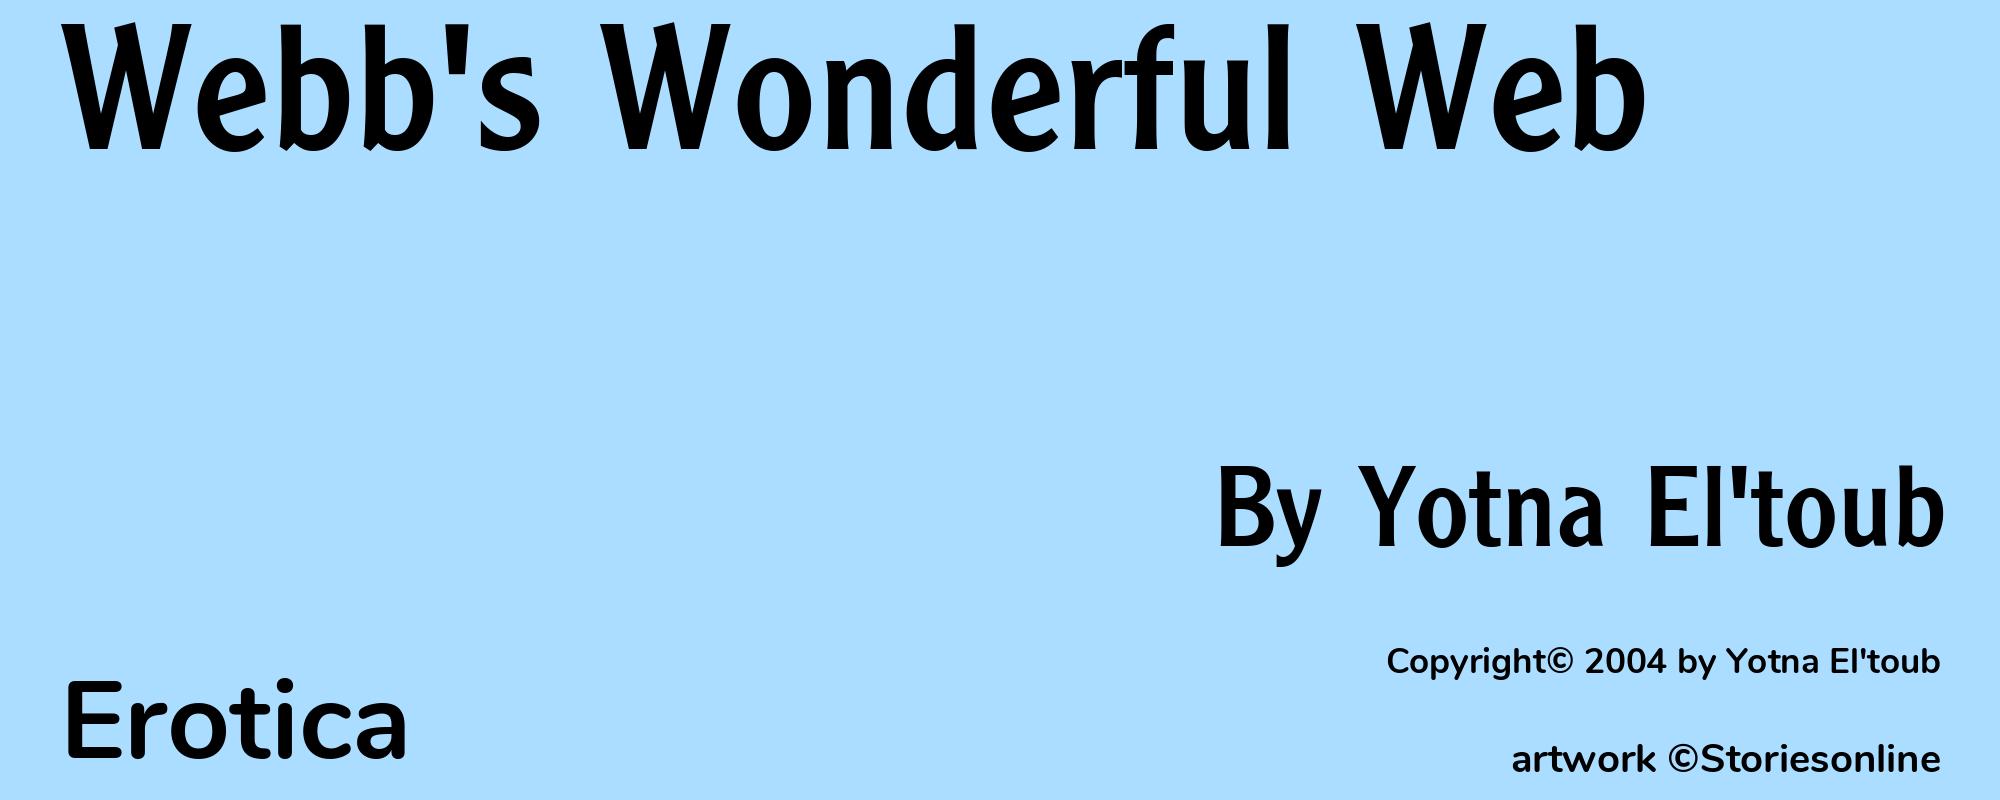 Webb's Wonderful Web - Cover